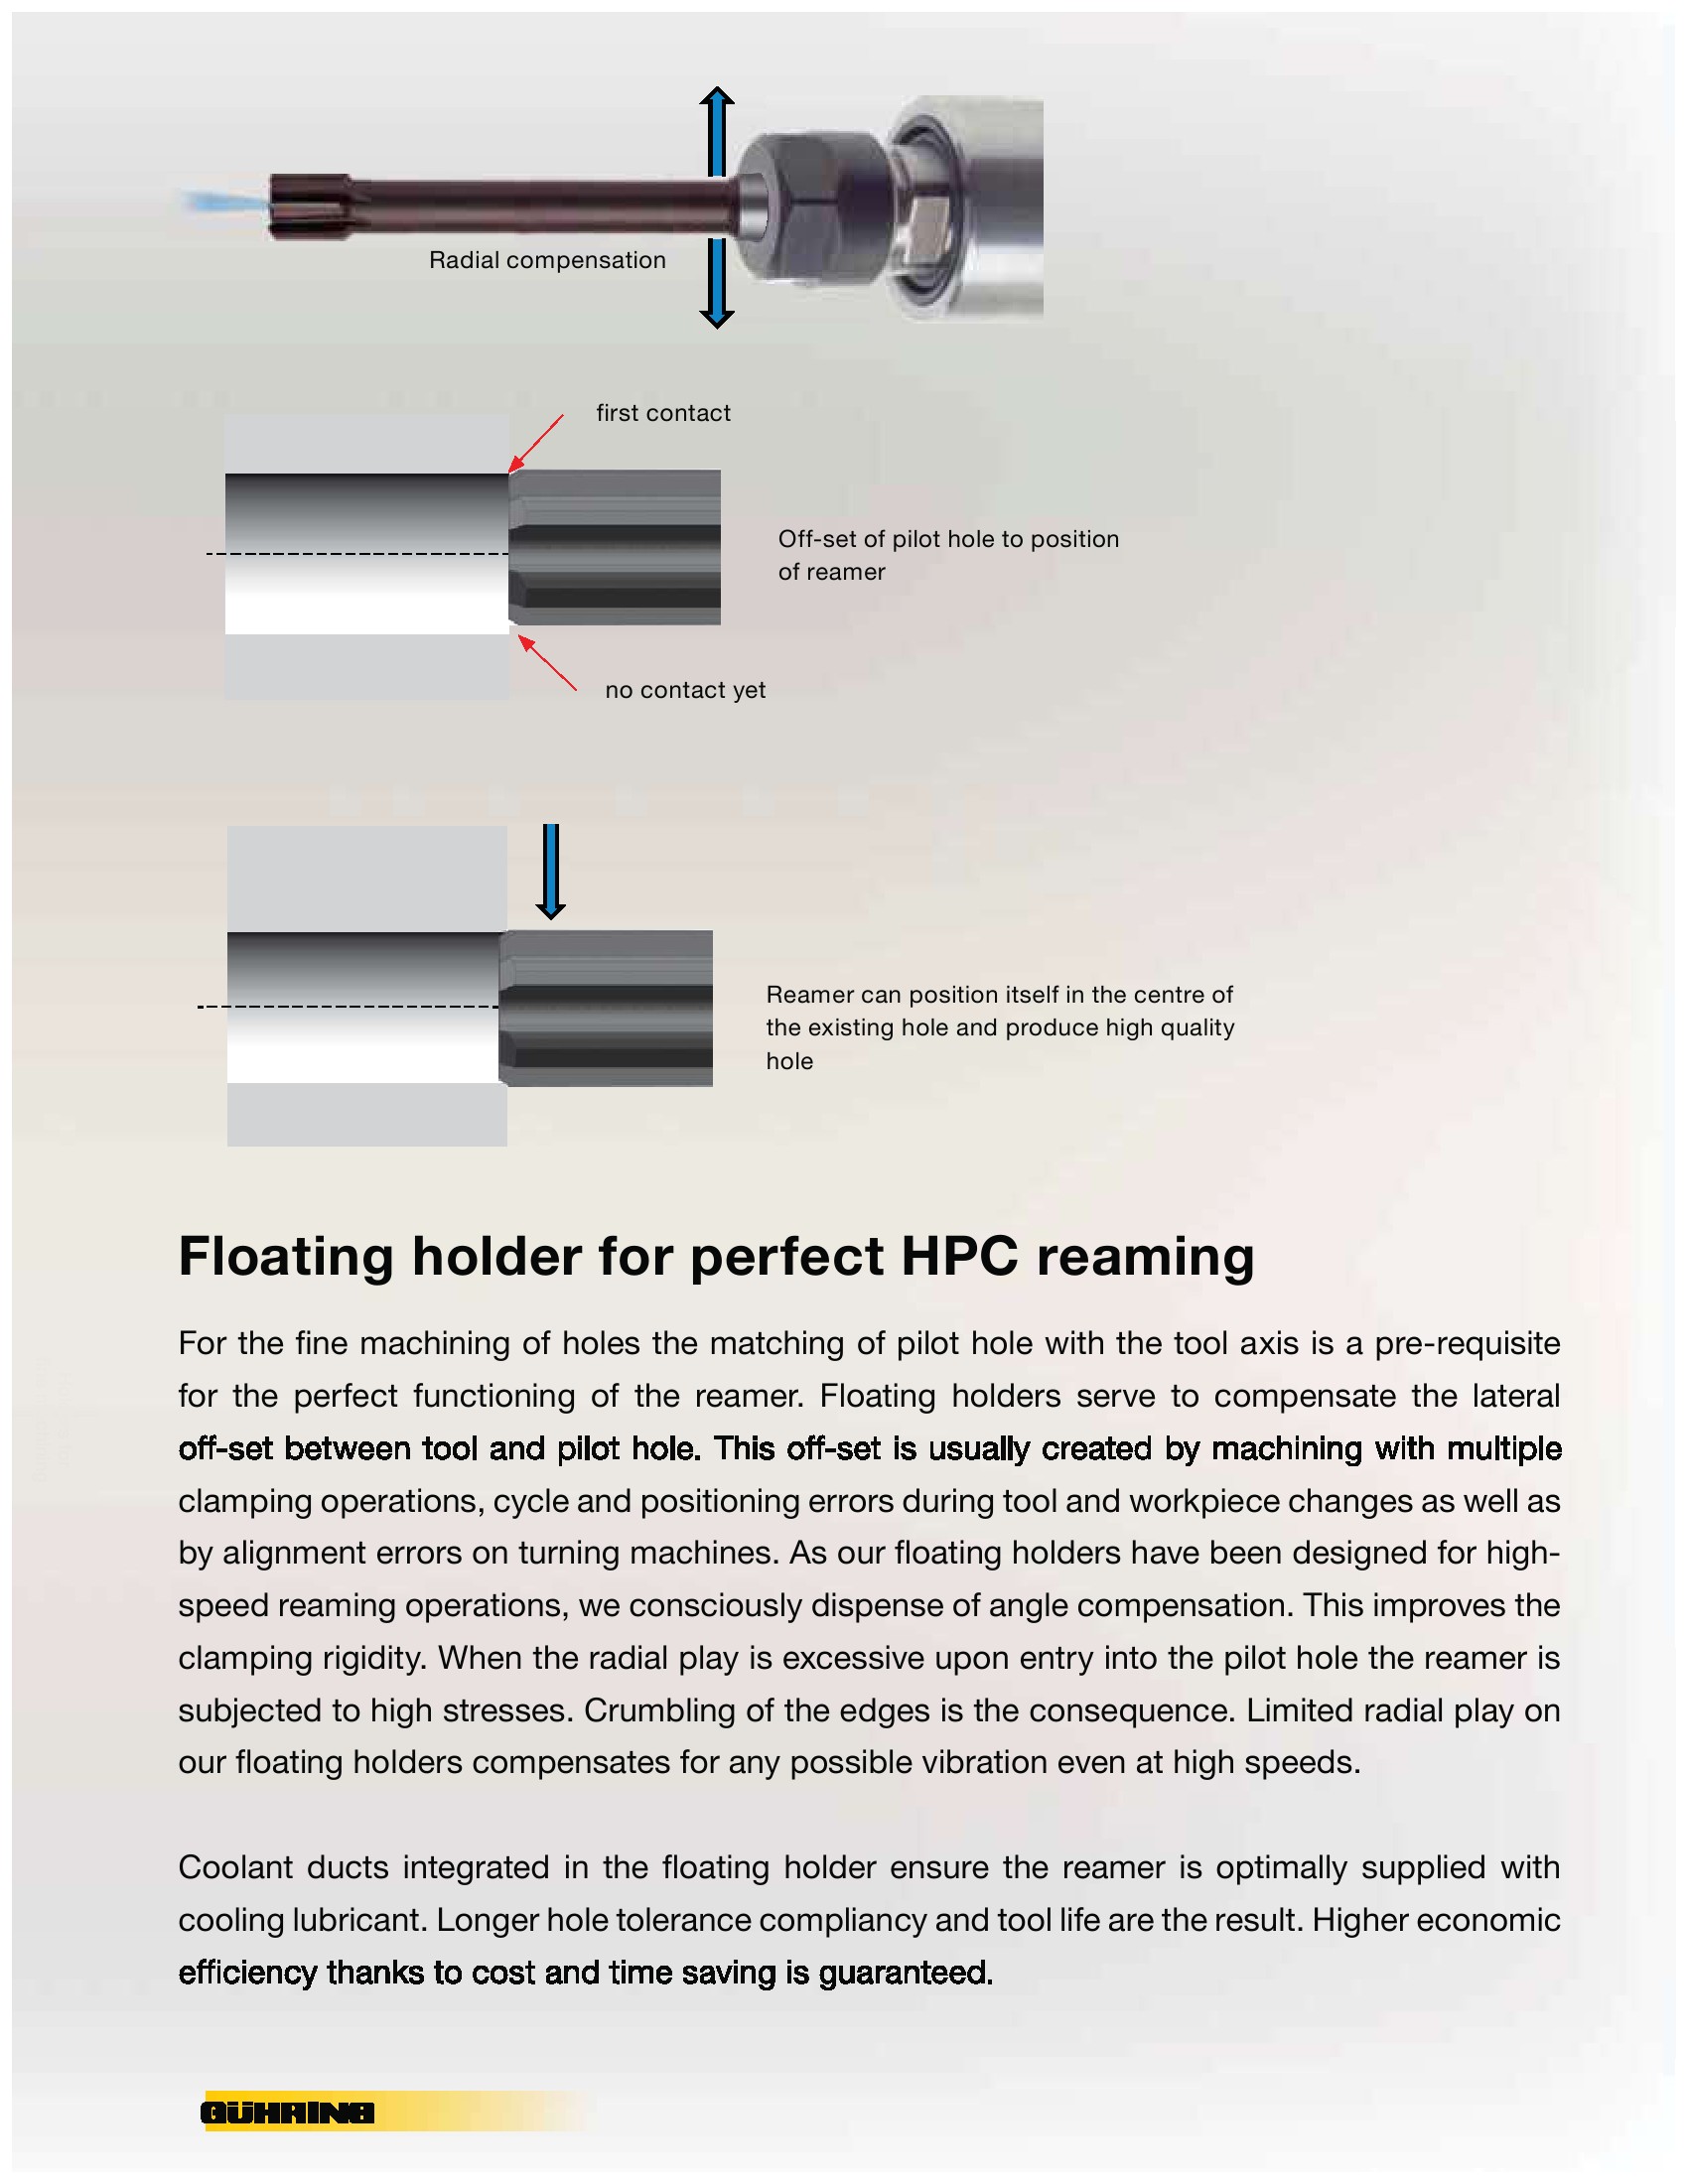 5//8/" I.D x 20mm Nominal Size GUHRING GuhrOJet Peripheral Coolant Through HPC